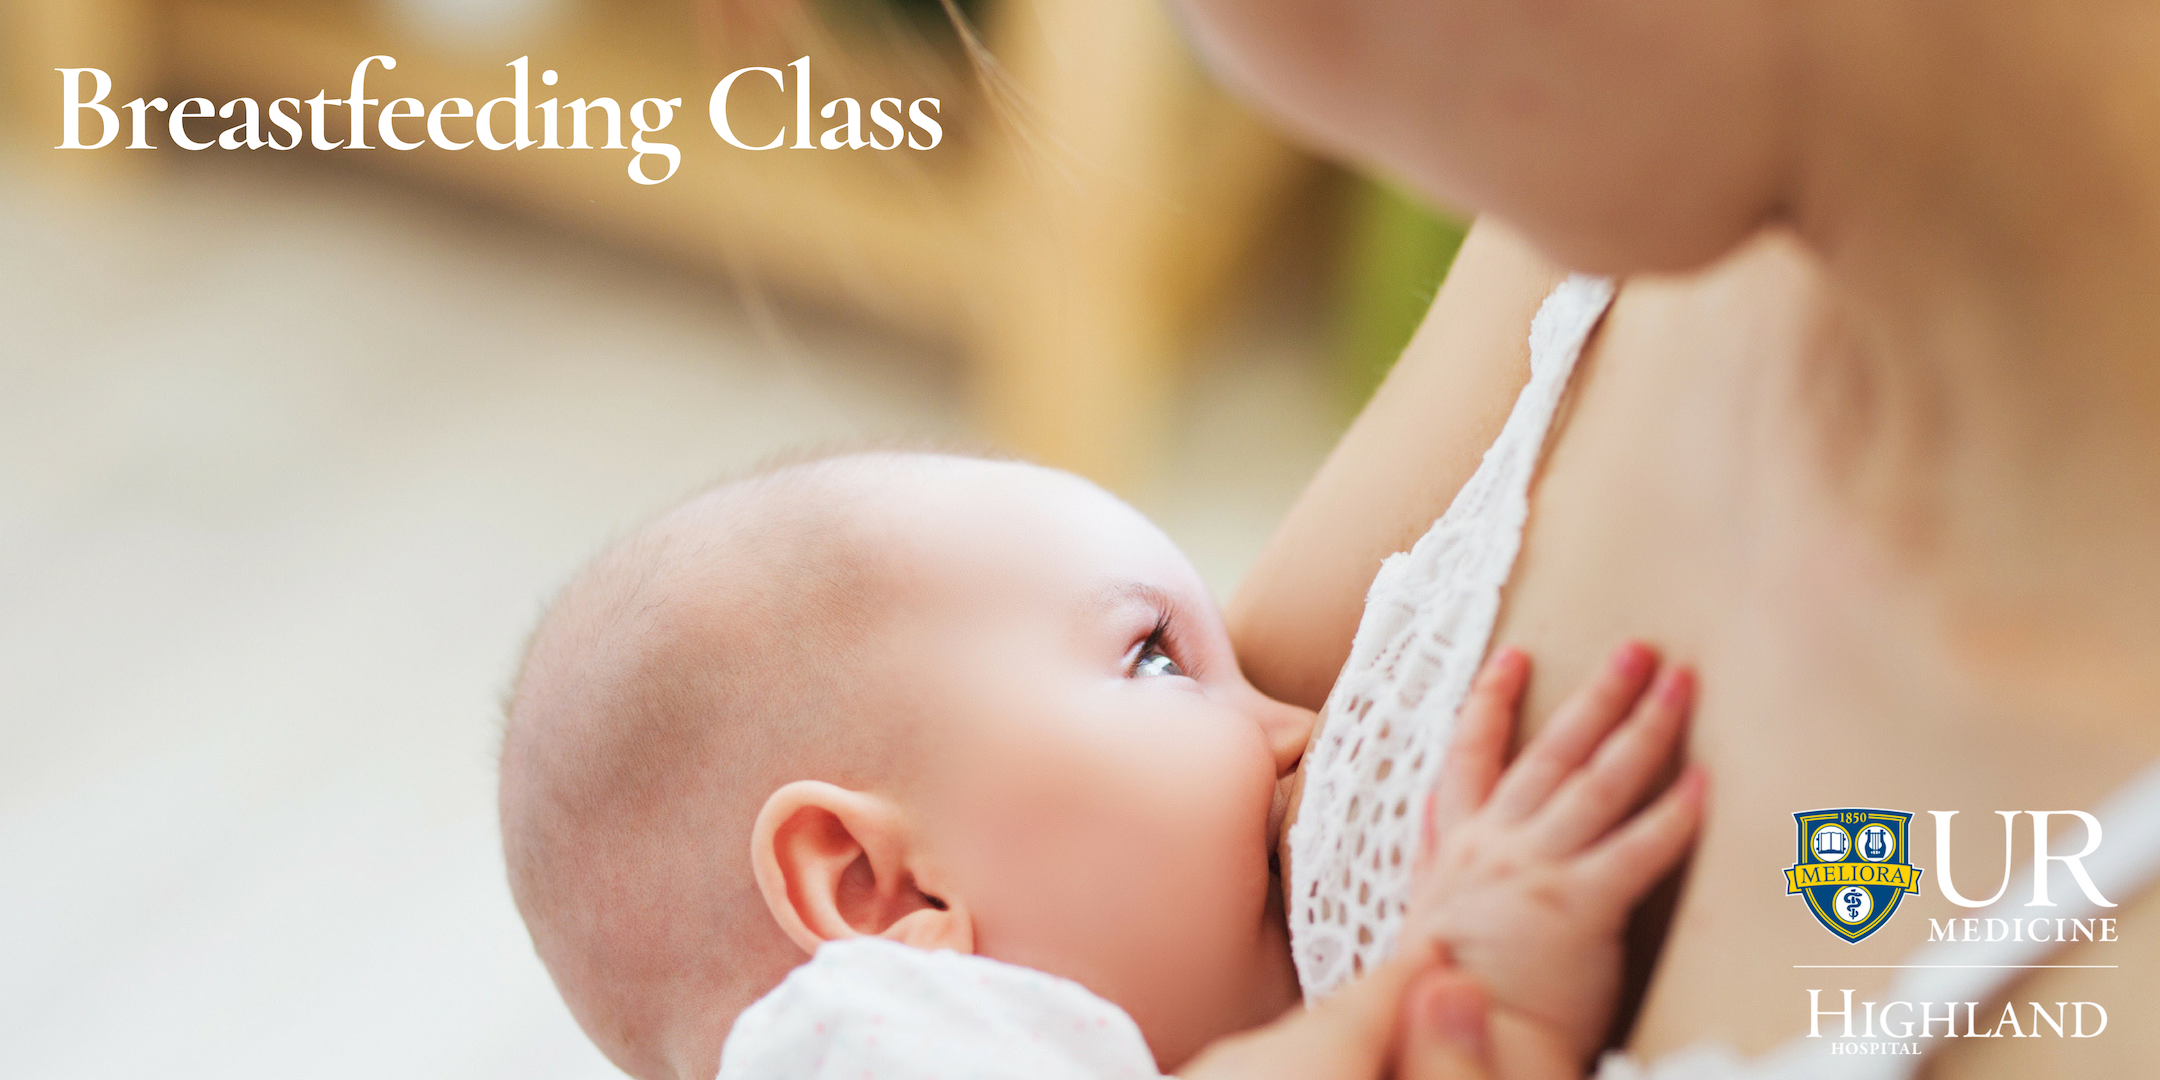 Breastfeeding Class, Wednesday 7/8/20